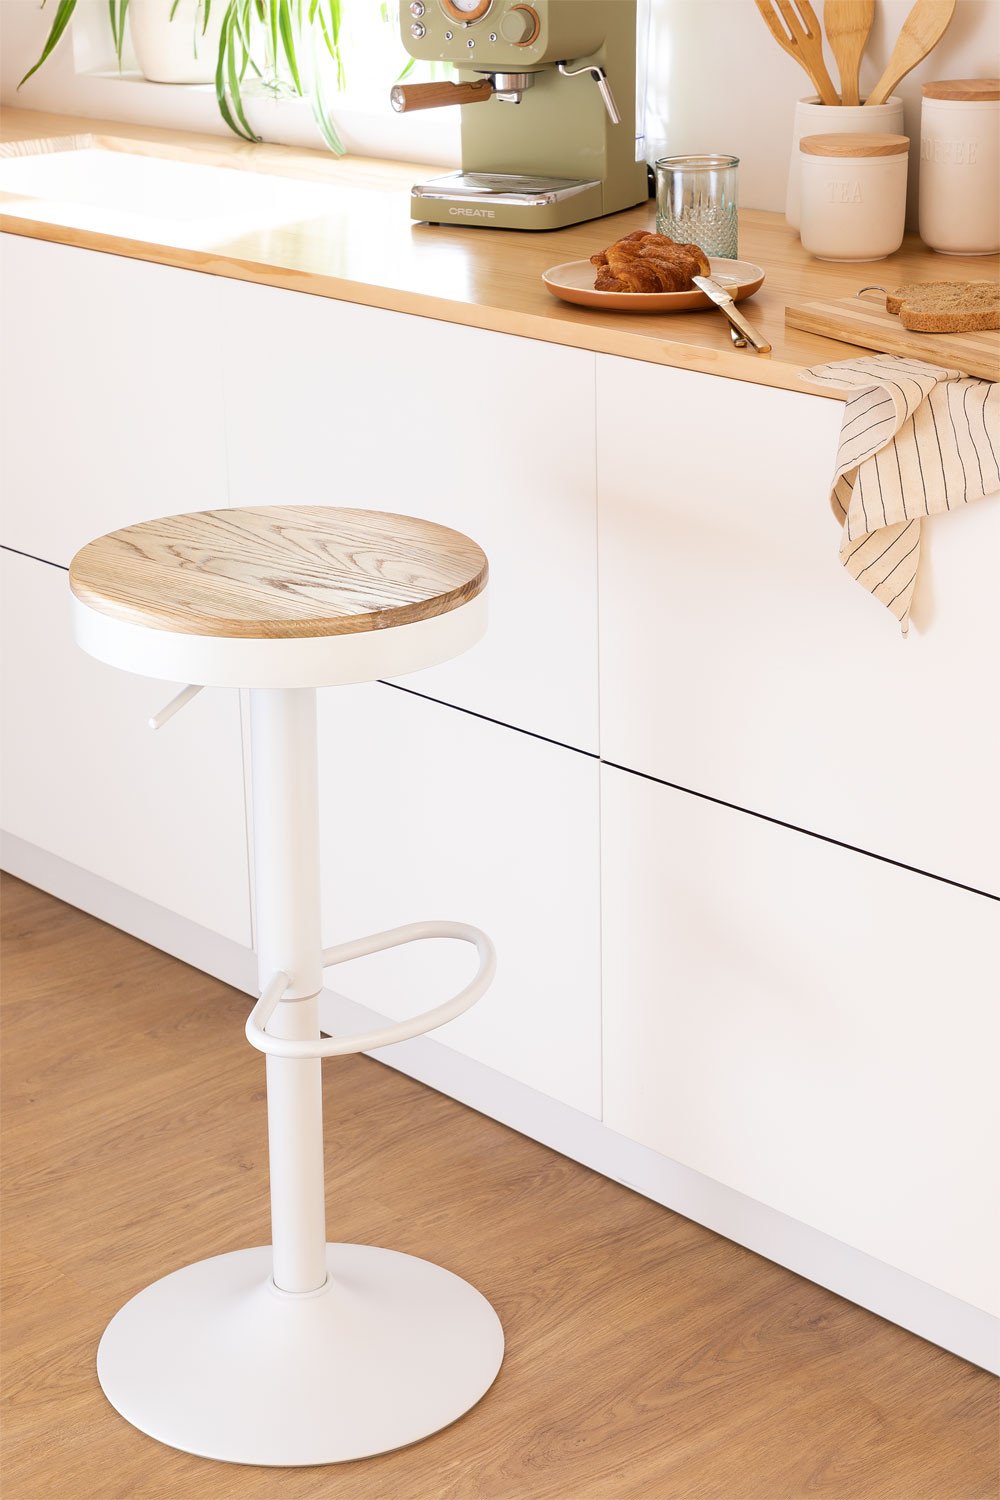 Mueble de Cocina para Microondas Dalma Color Marrón